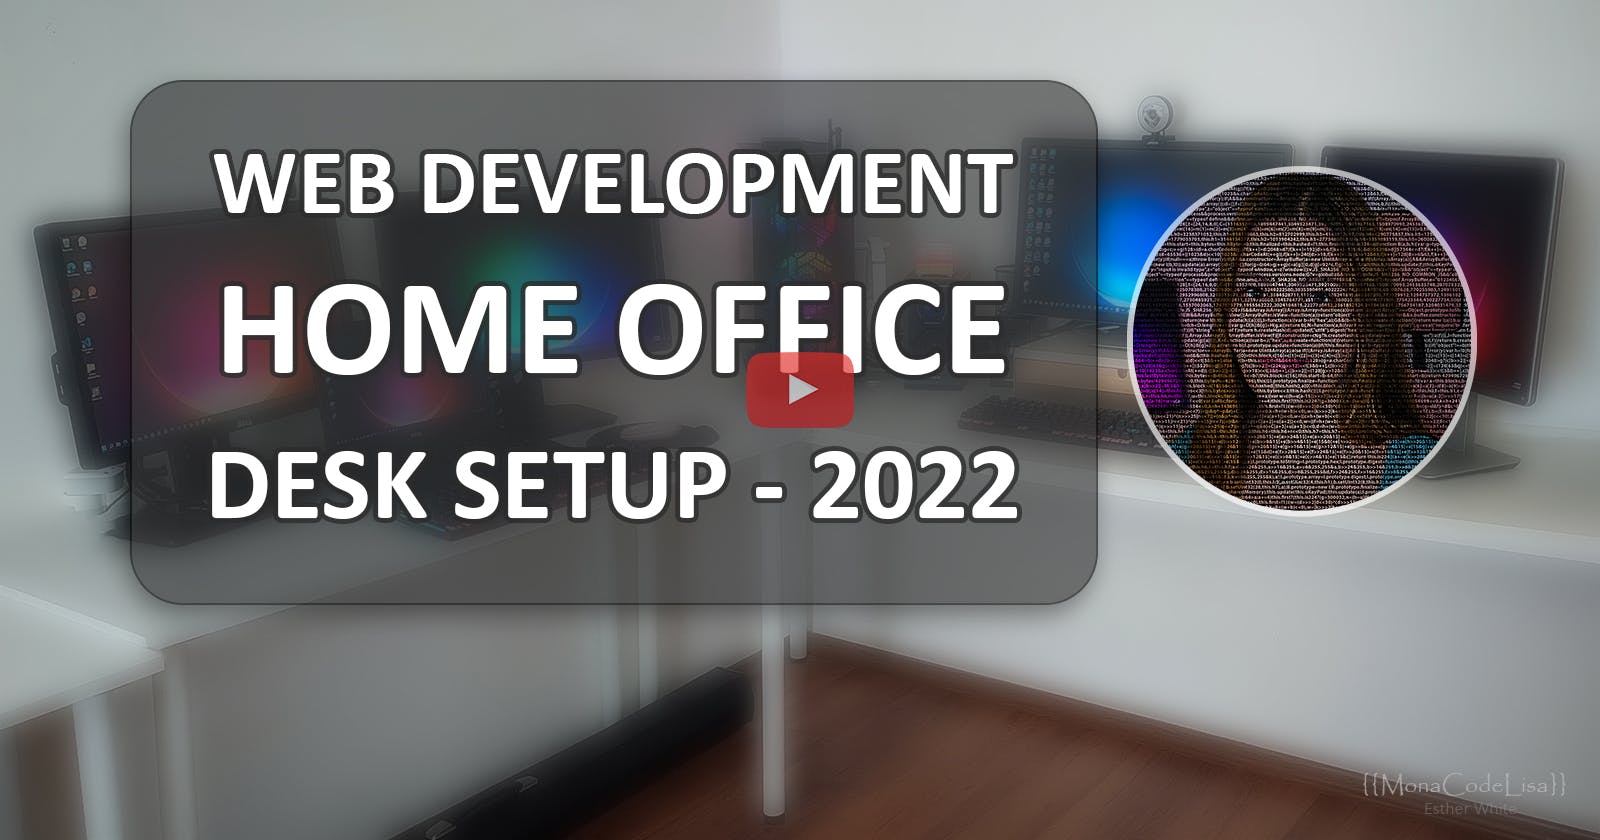 My Web Development Home Office Desk Setup Progression – 2022